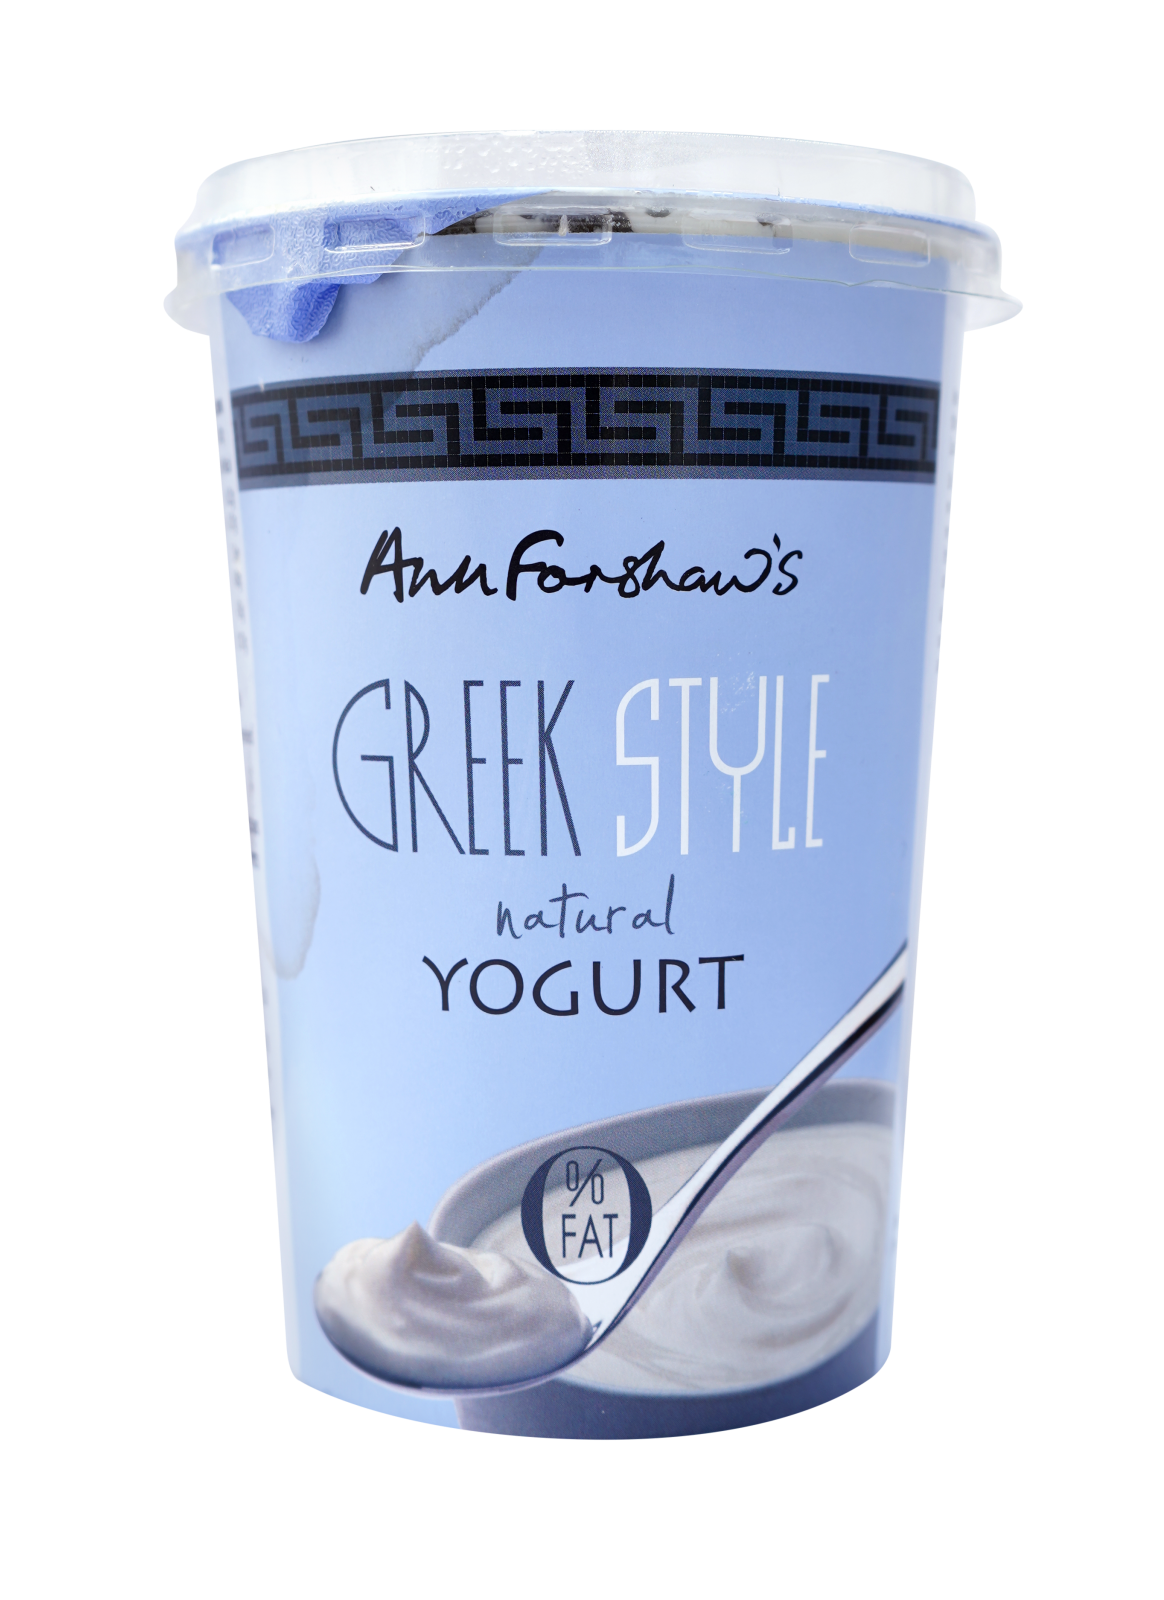 Natural Greek Yogurt, Ann Forshaw's (450g)